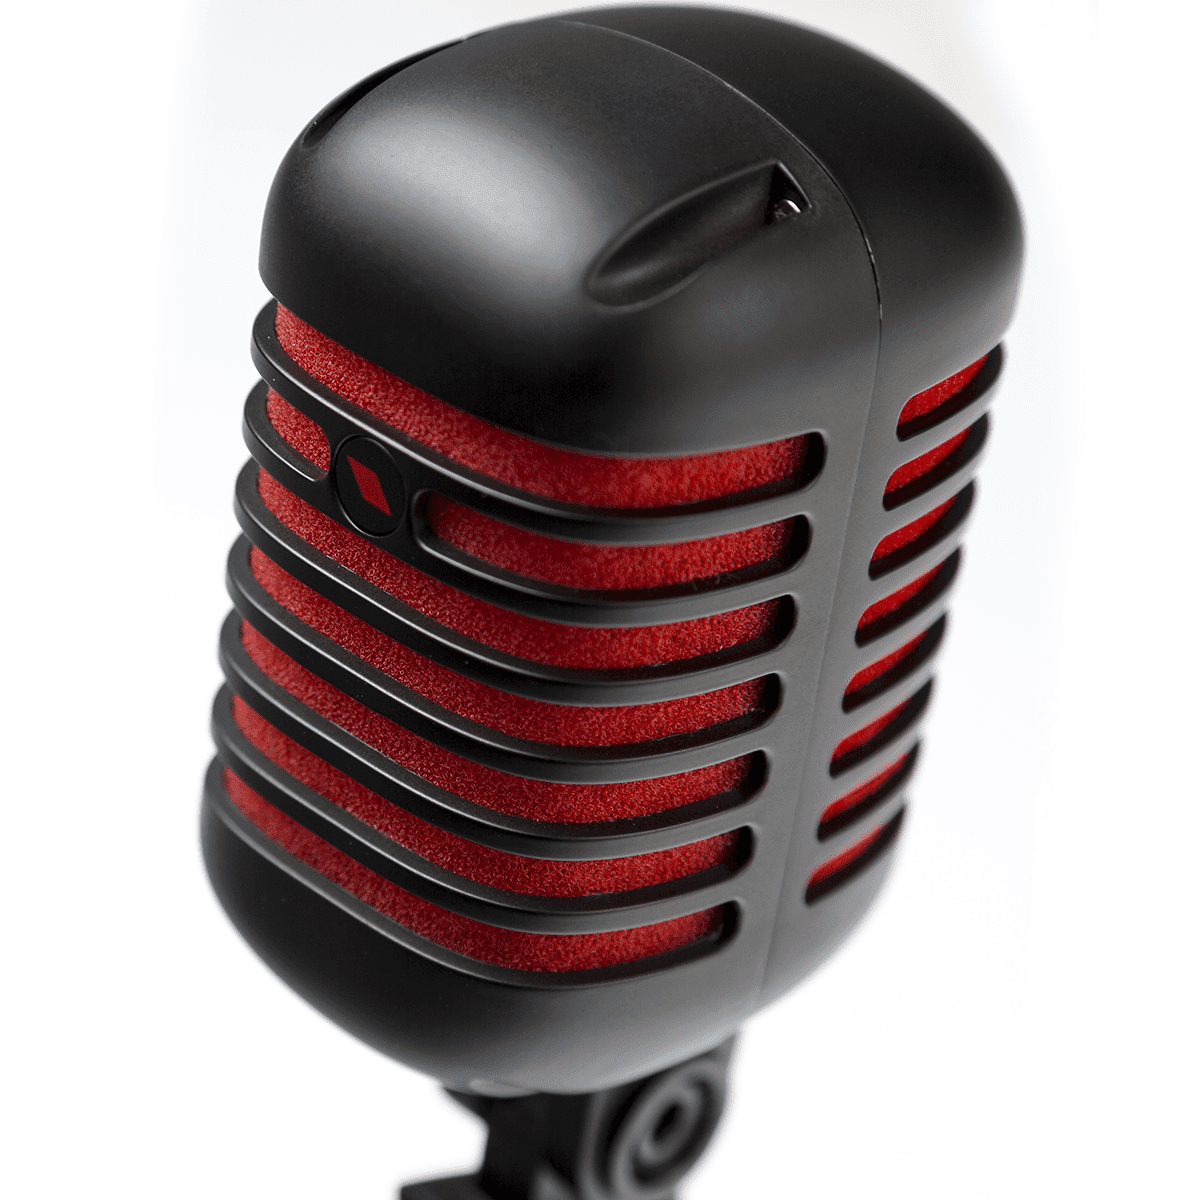 Eikon DM55V2RDBK “Vintage” Professional Vocal Dynamic Microphone Satin Black & Red